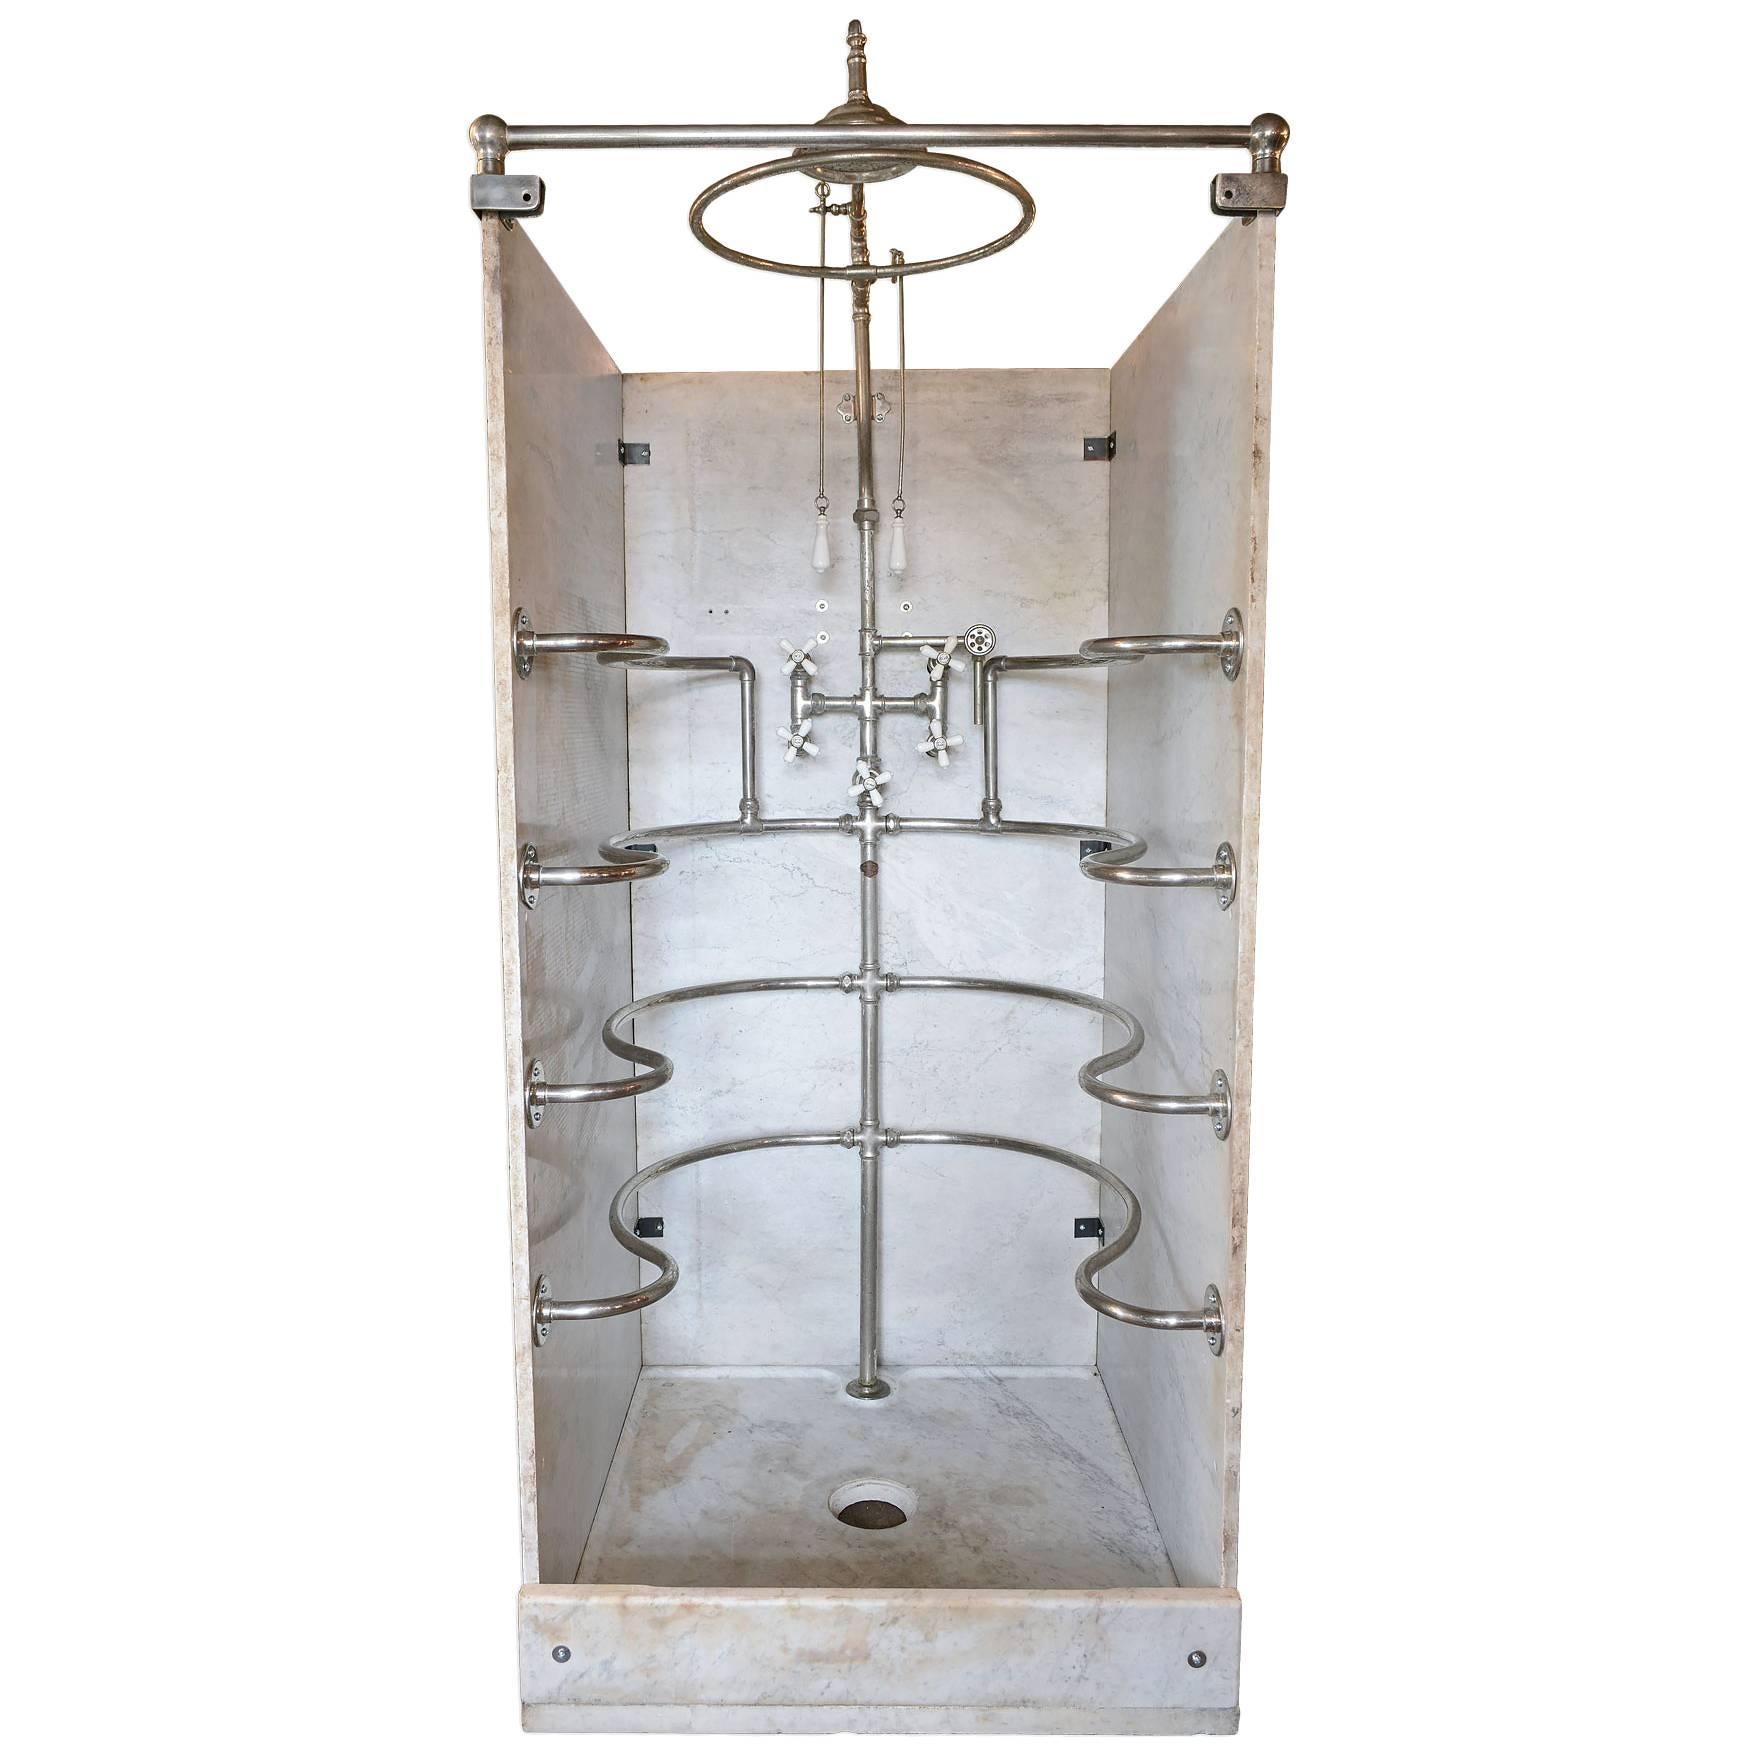 Rib Cage Shower Unit by Wolfe, circa 1900